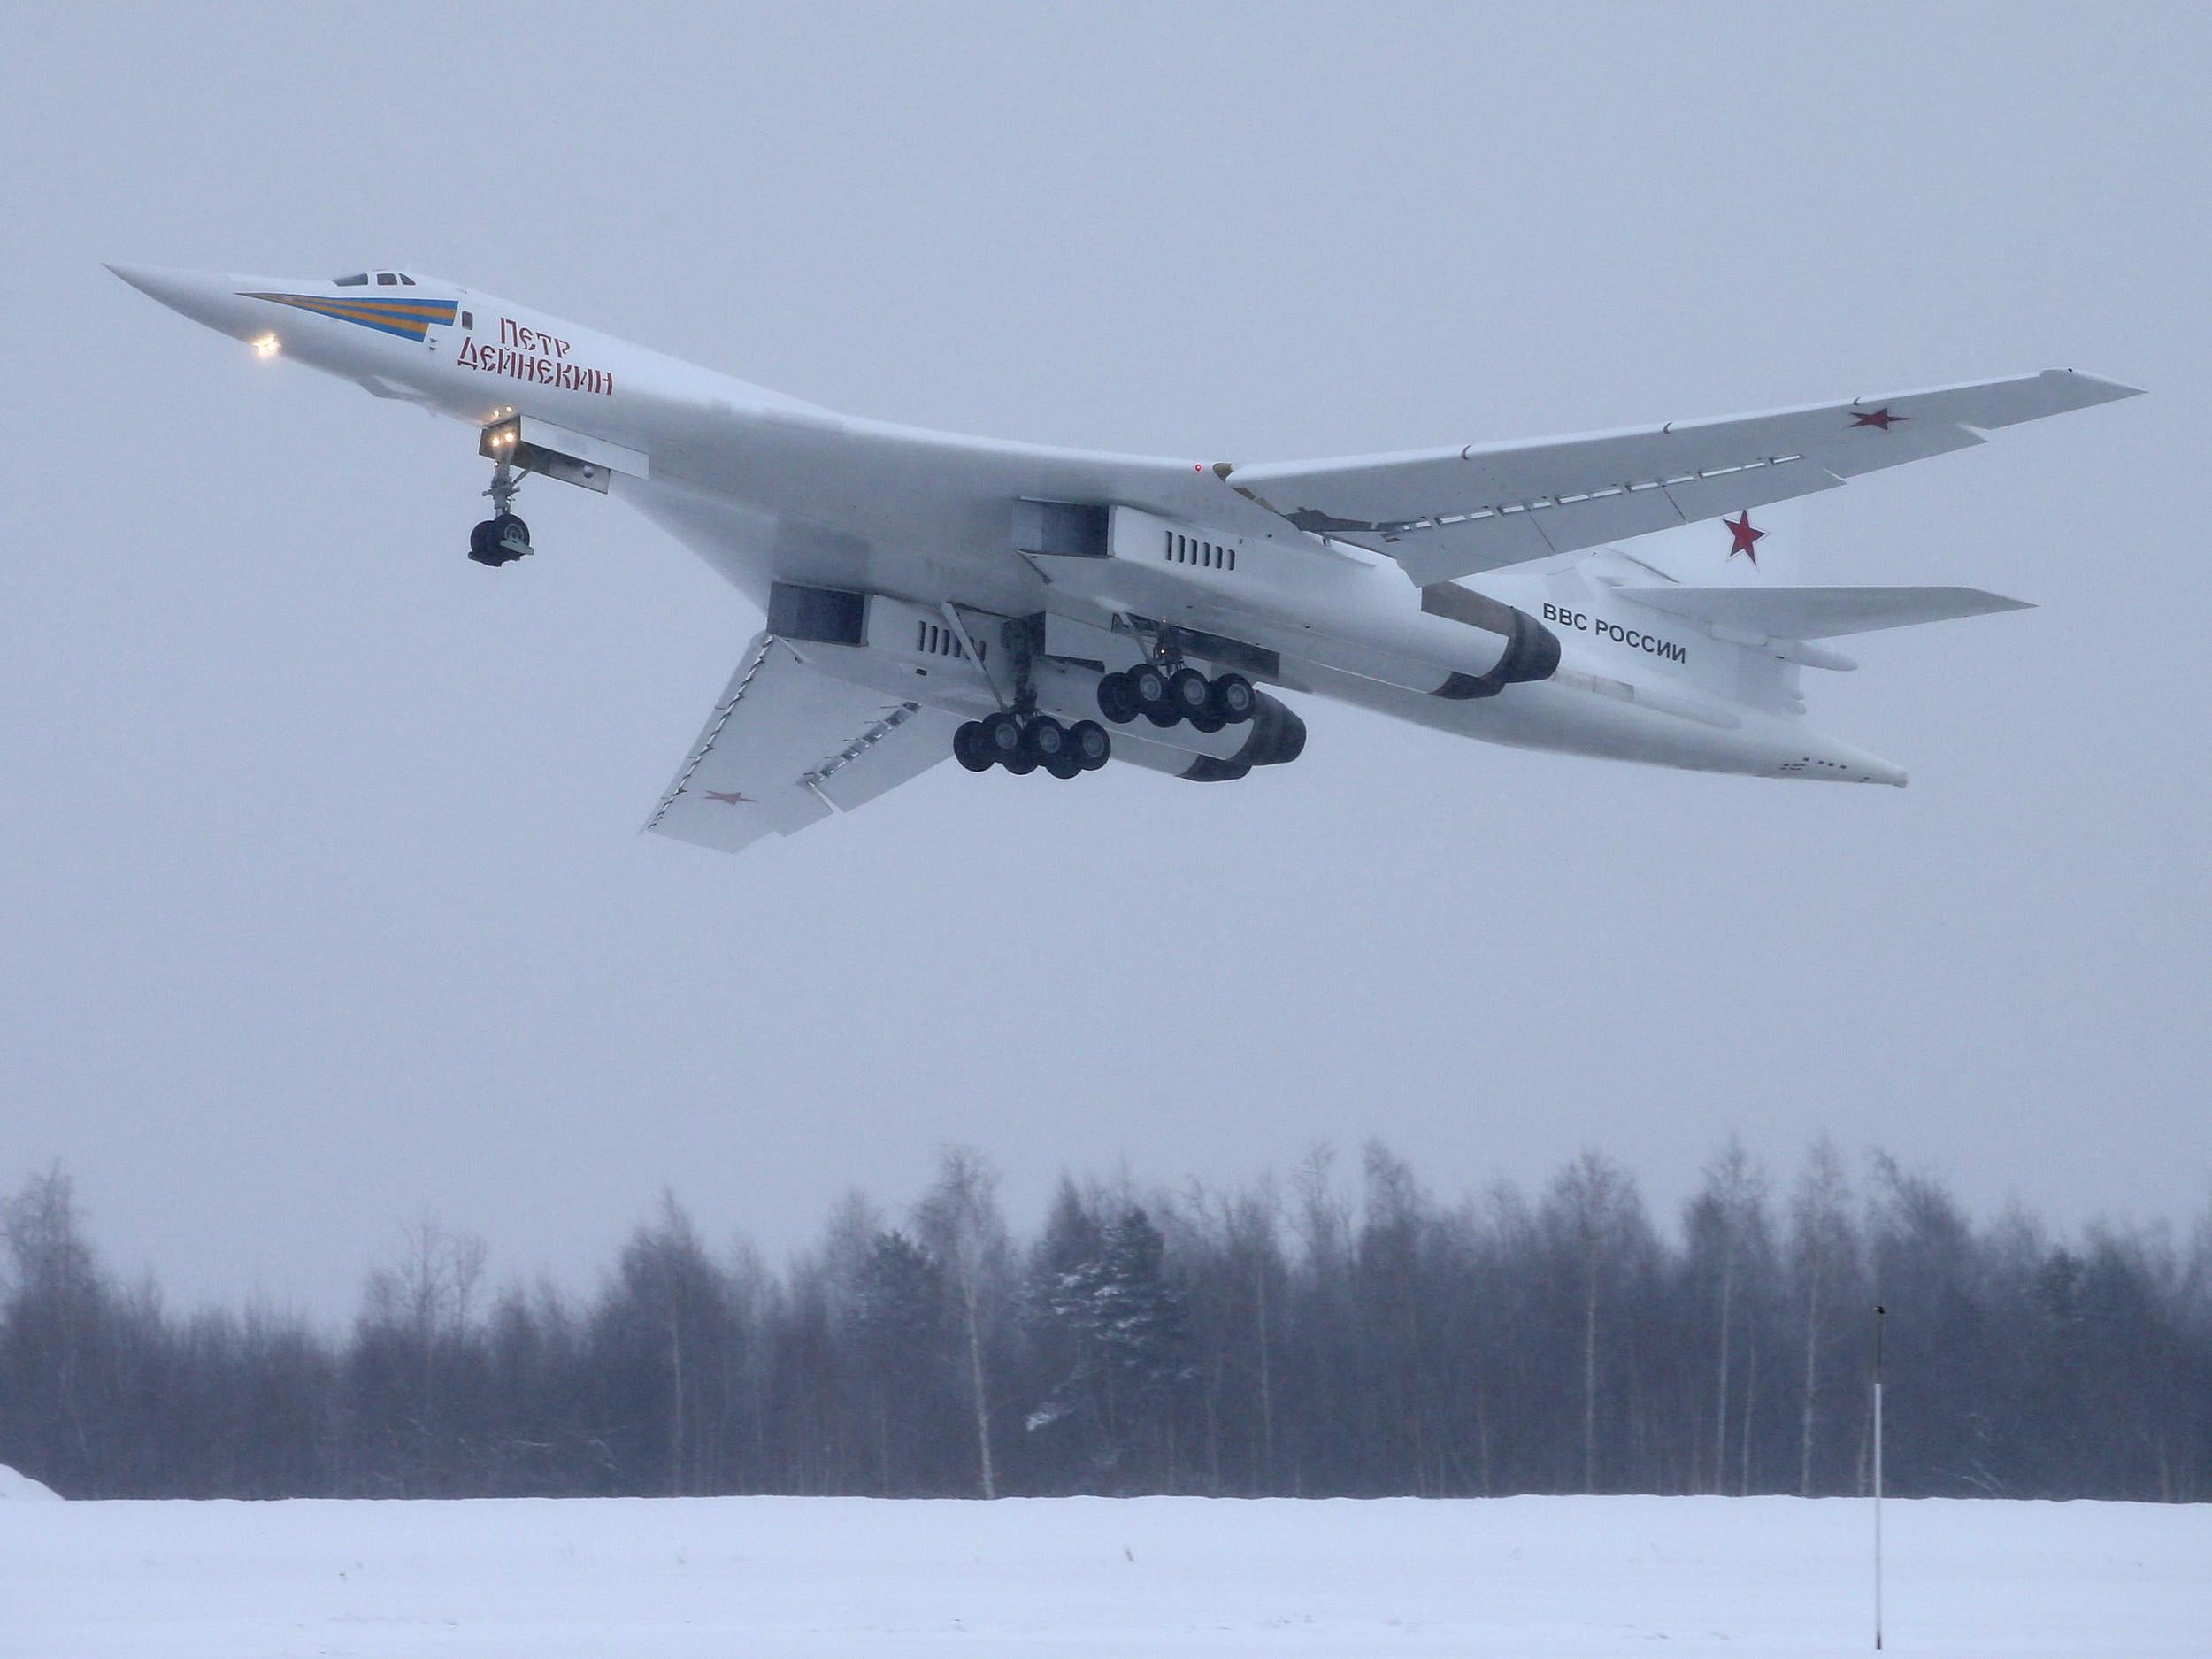 TU-160M heavy strategic bomber performs demonstration flight